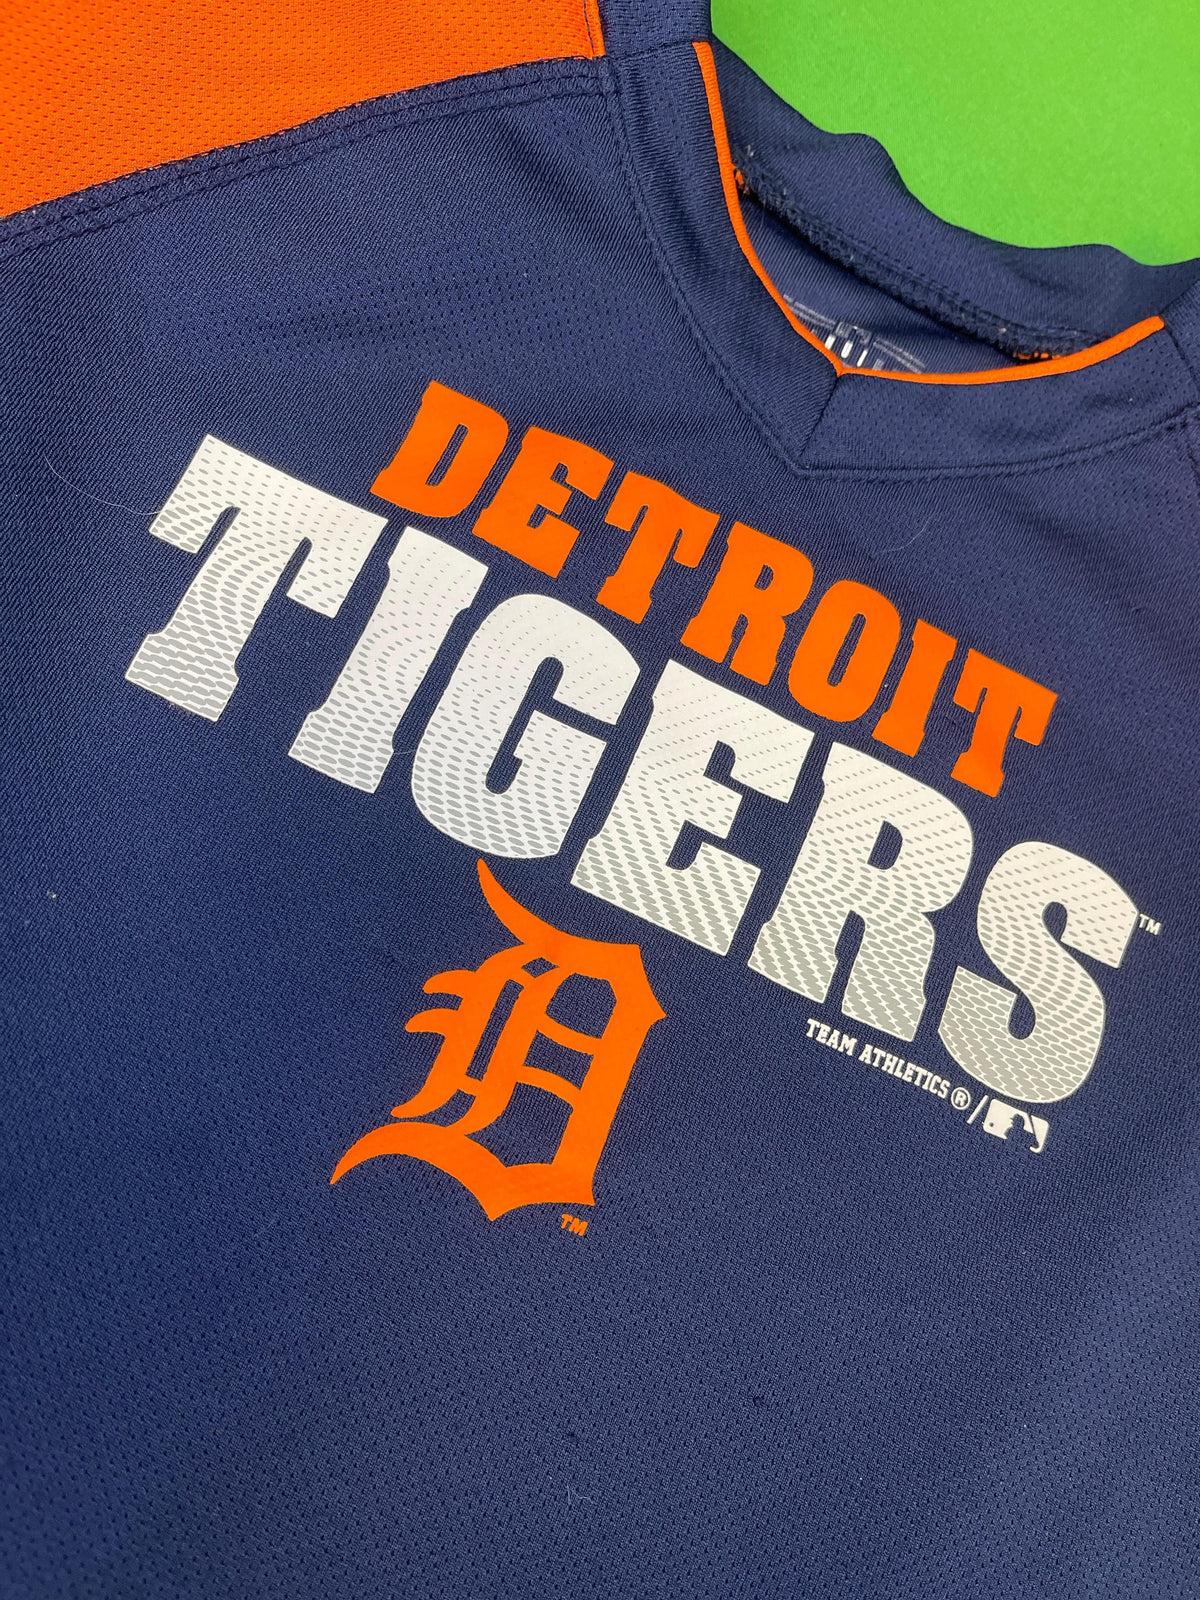 MLB Detroit Tigers Wicking T-Shirt Toddler 18 months